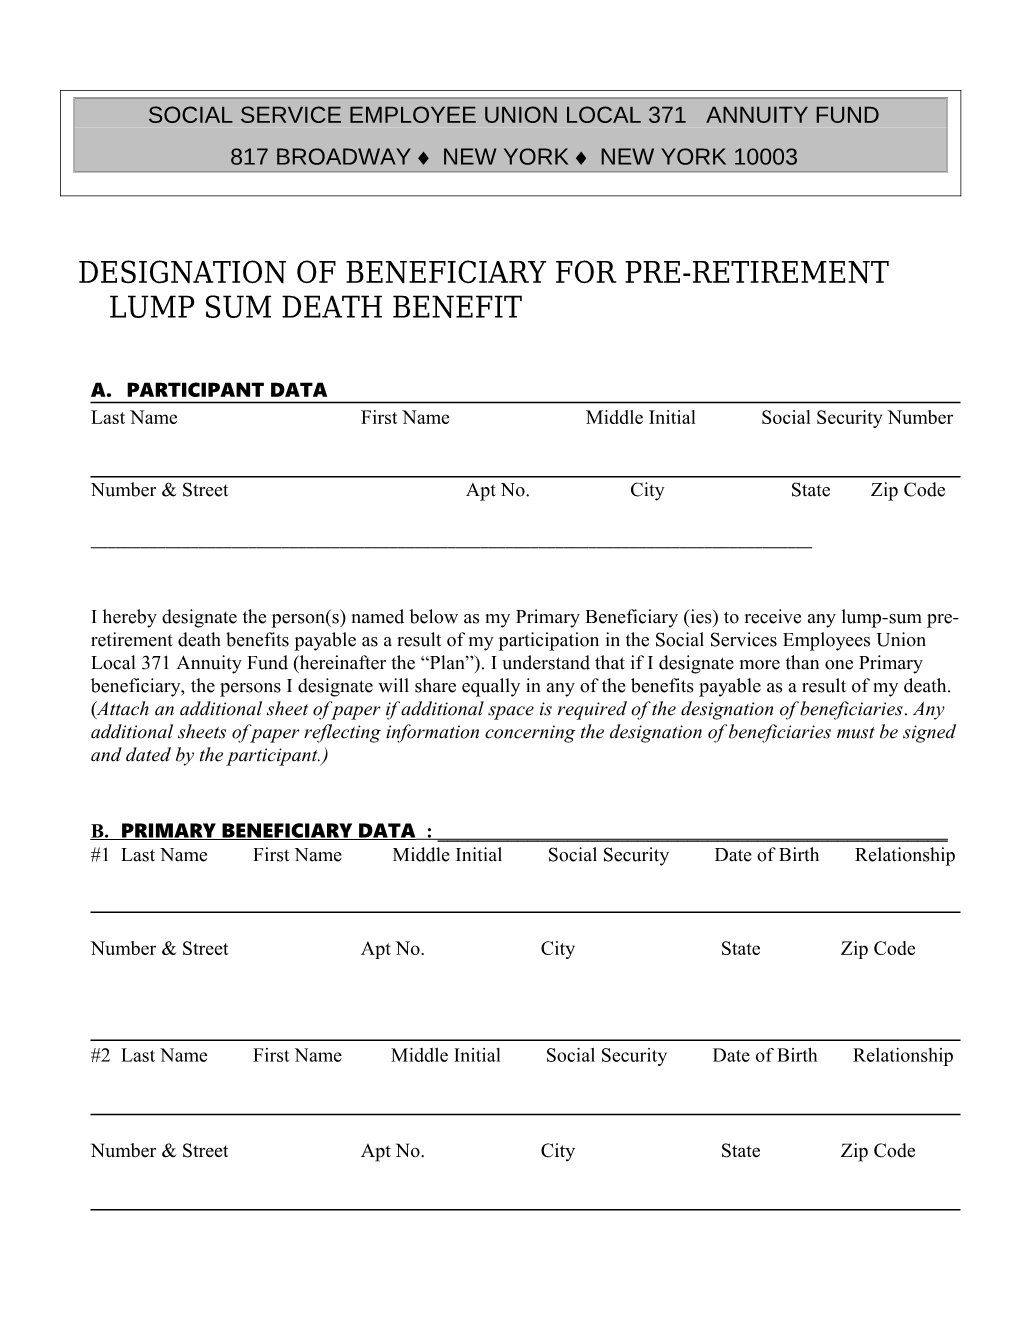 Designation of Beneficiary for Pre-Retirement Lump Sum Death Benefit